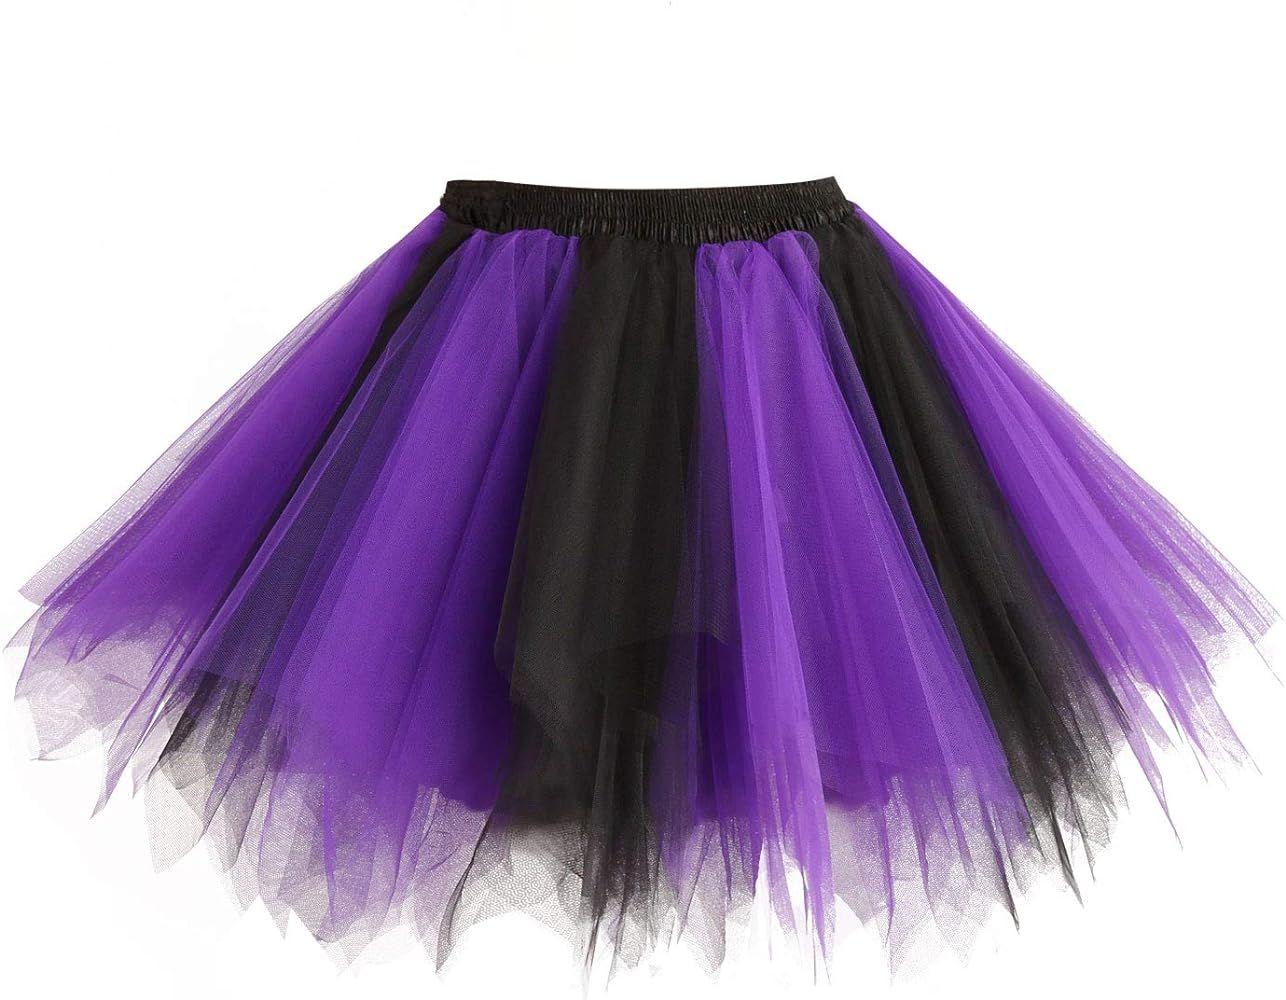 Girstunm Women's 1950s Vintage Petticoats Bubble Tutu Dance Half Slip Skirt | Amazon (US)